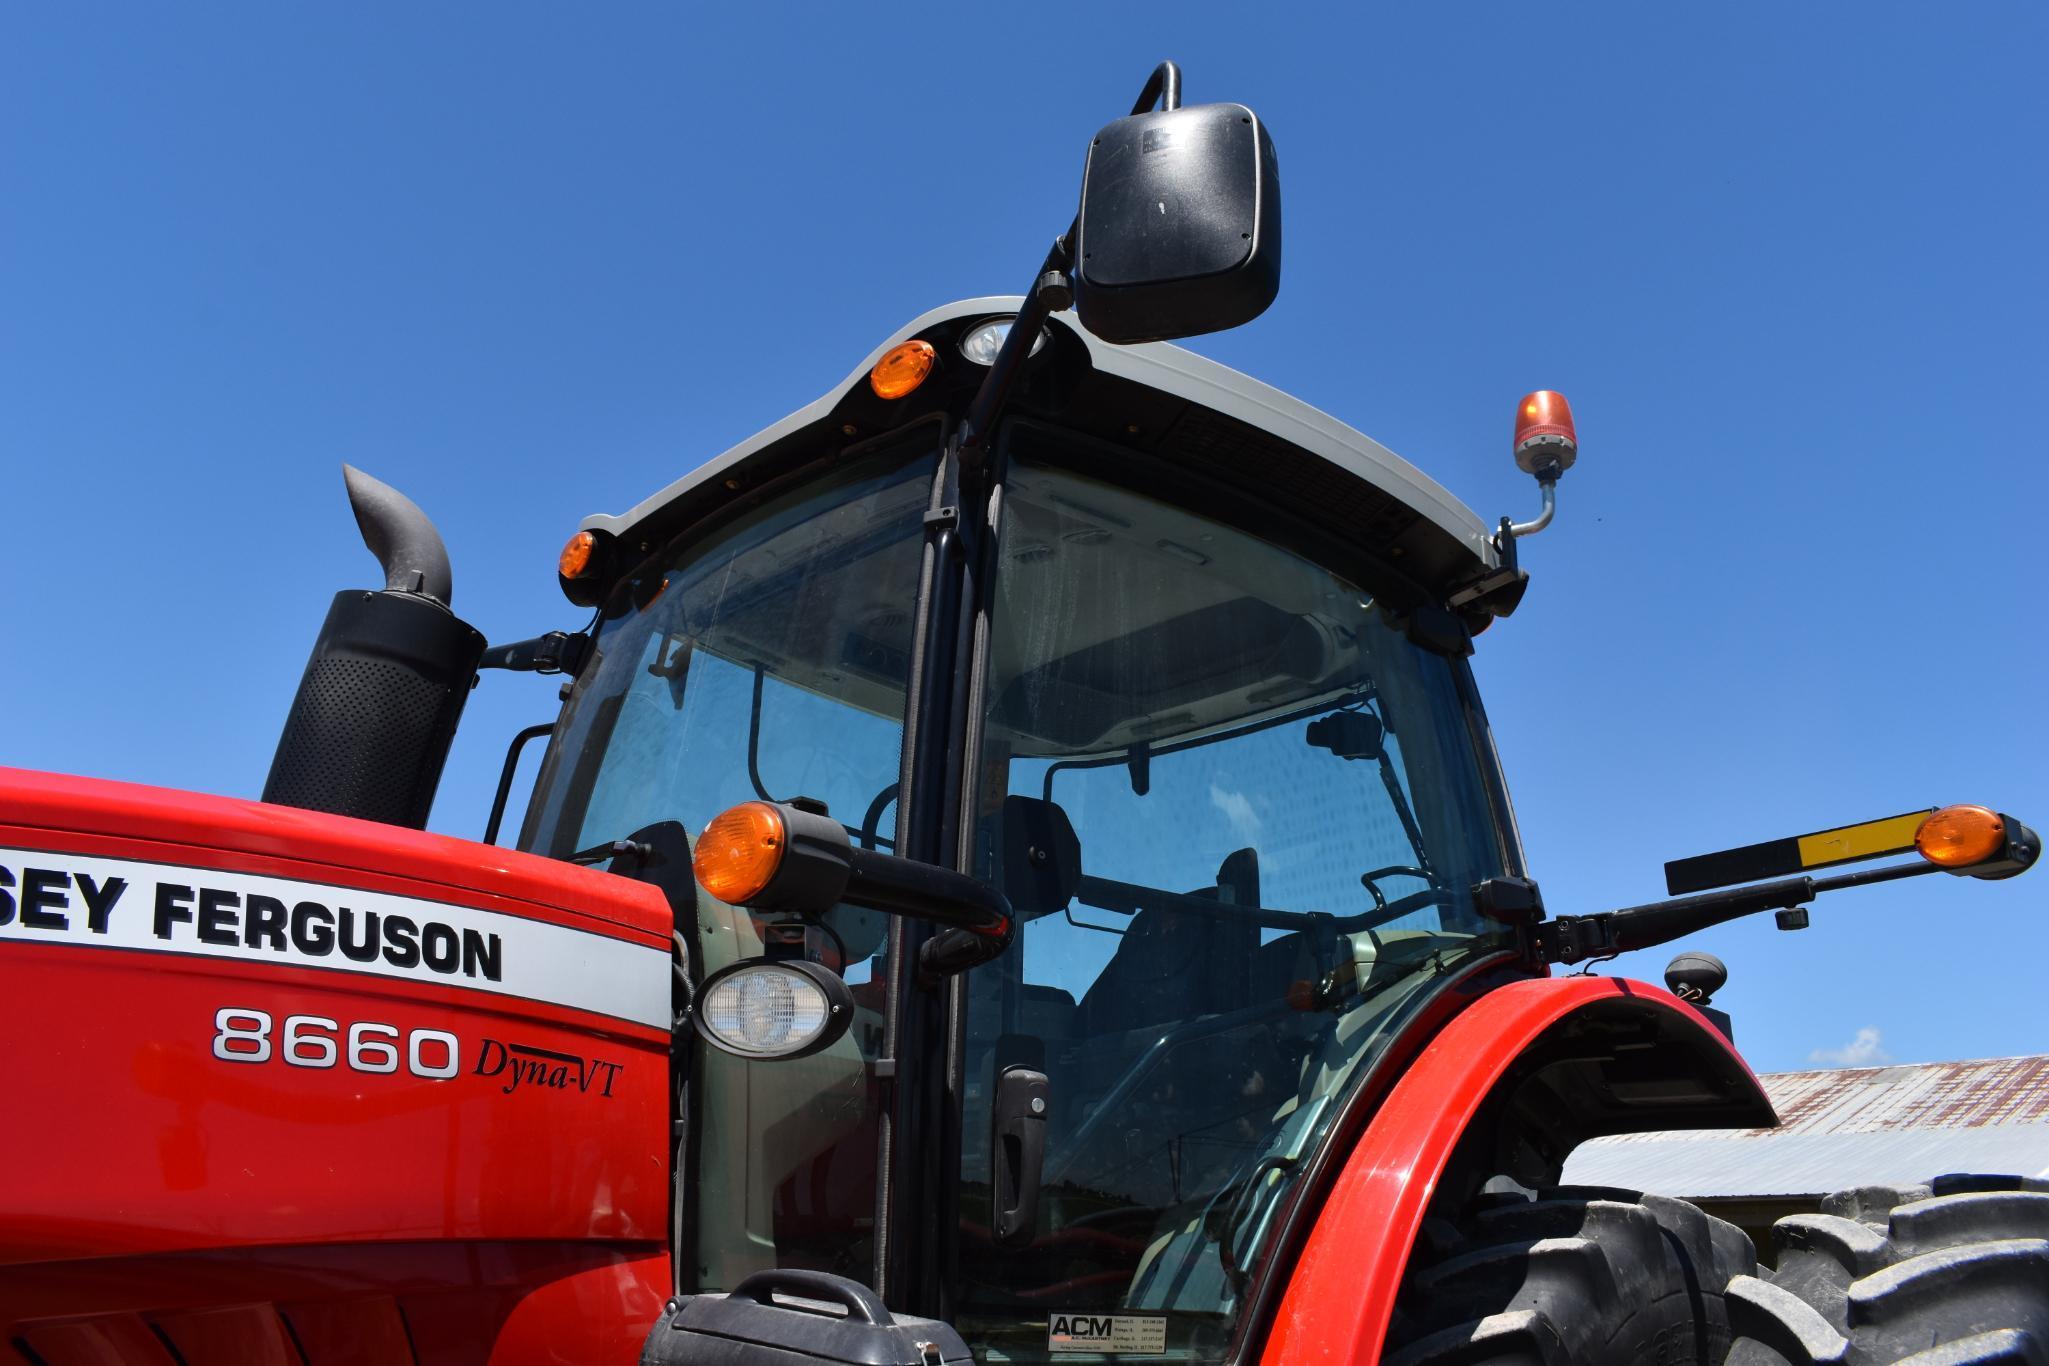 2012 Massey Ferguson 8660 MFWD tractor